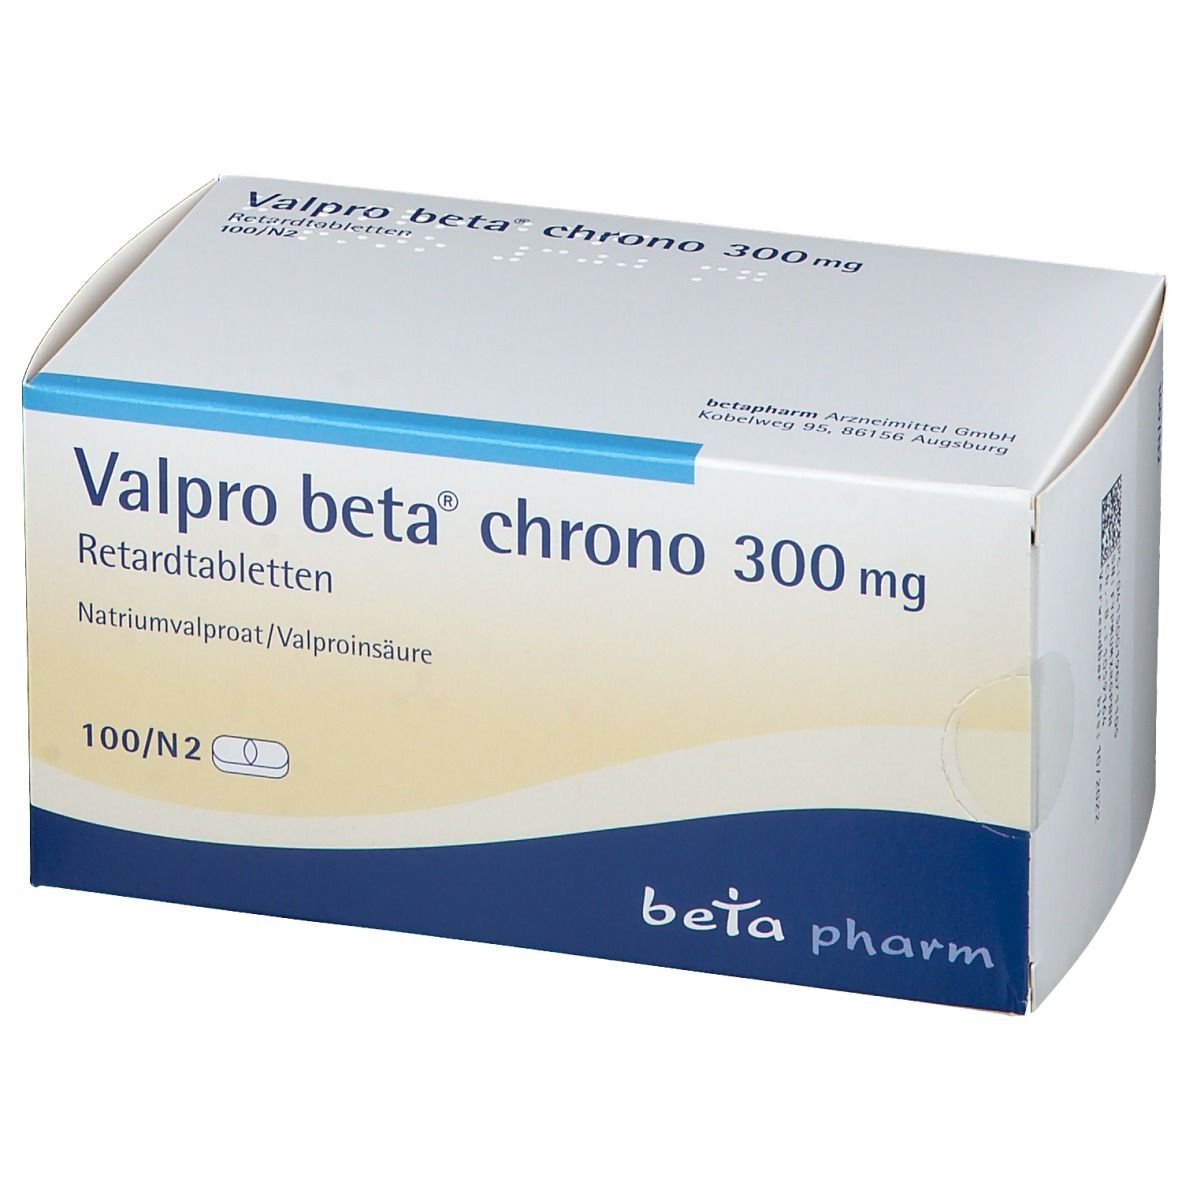 Valpro beta® chrono 300 mg